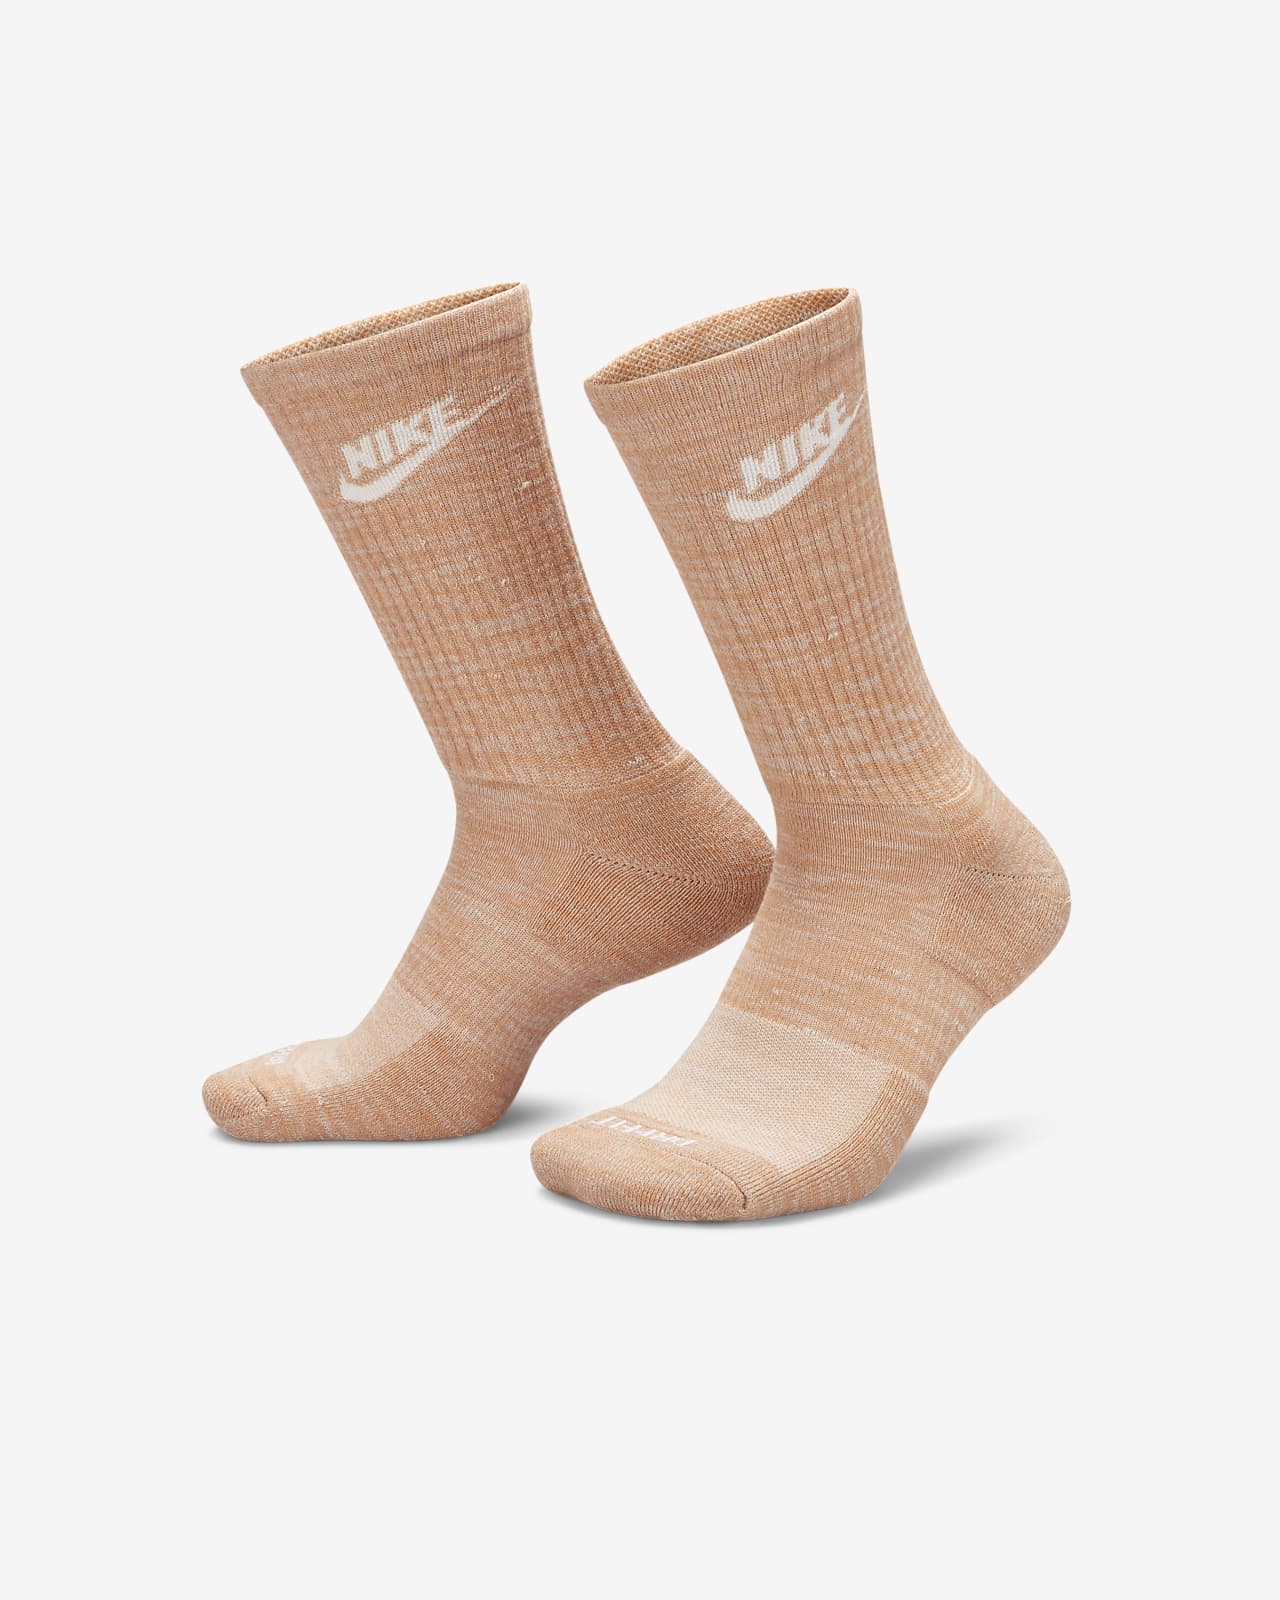 Nike Elite Socks  Foot Locker Canada